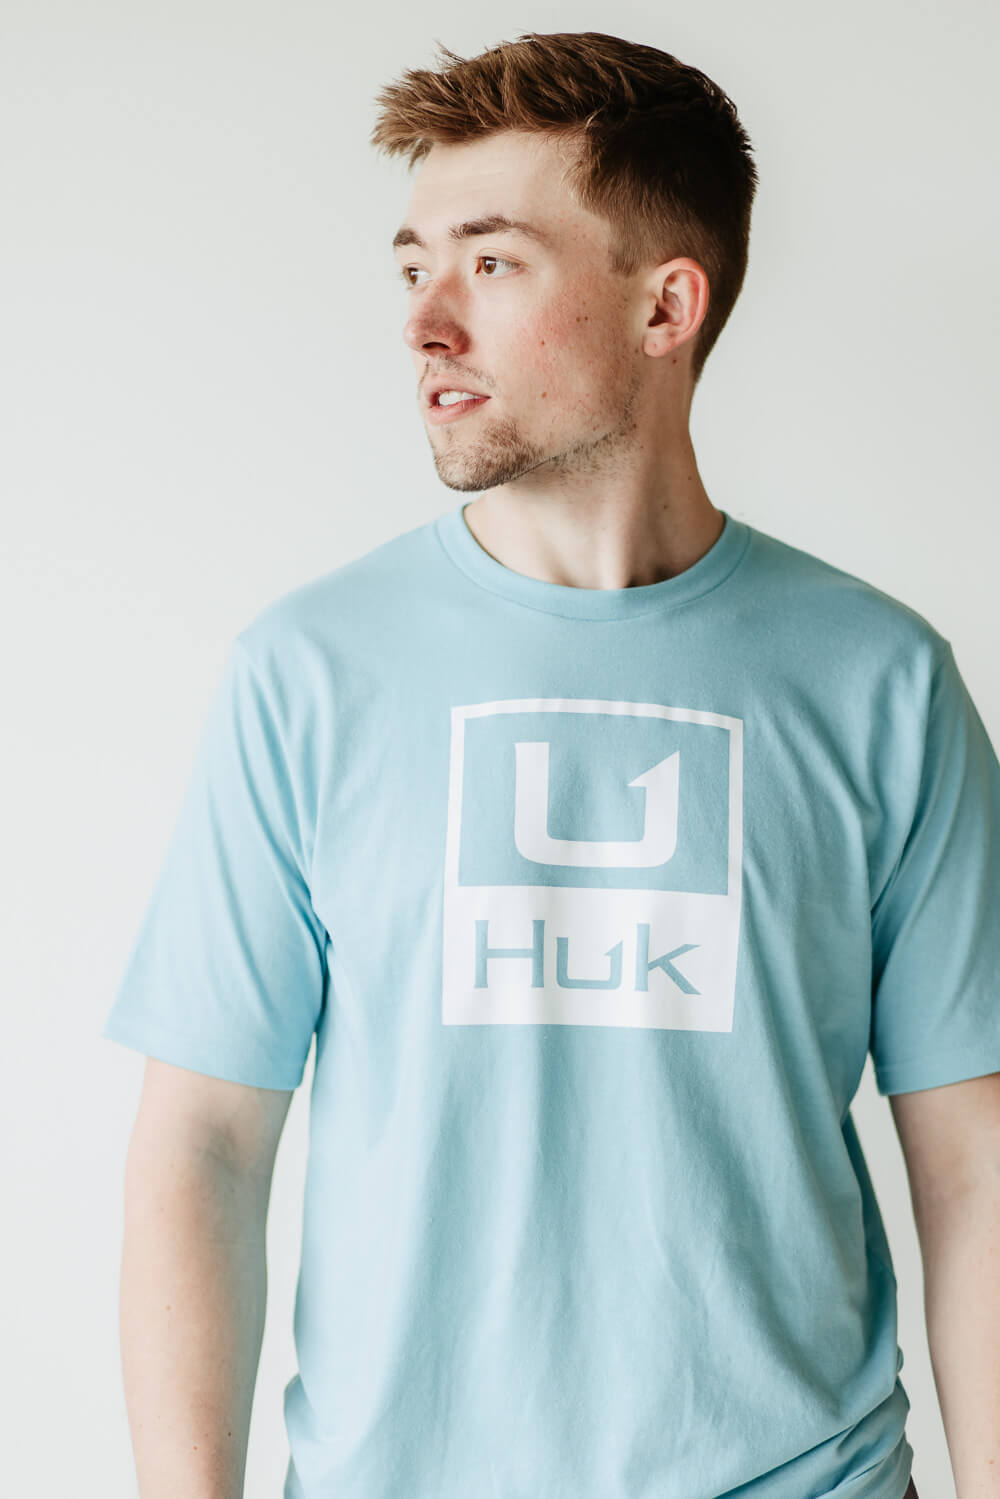 Huk Performance ￼Fishing Shirt Men S Vented Pockets Lightweight Long-Sleeve  Blue